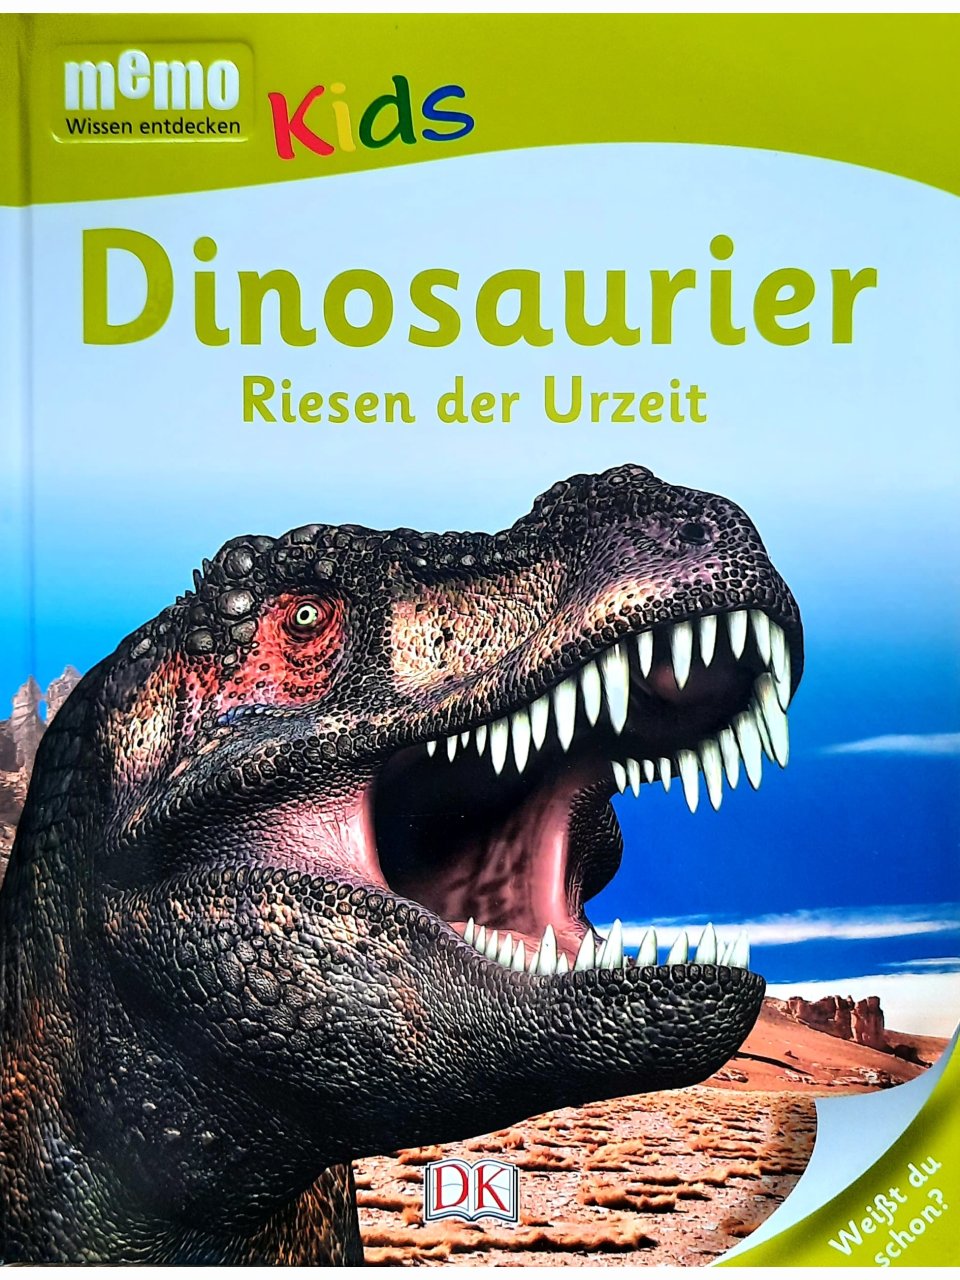 memo Kids - Dinosaurier